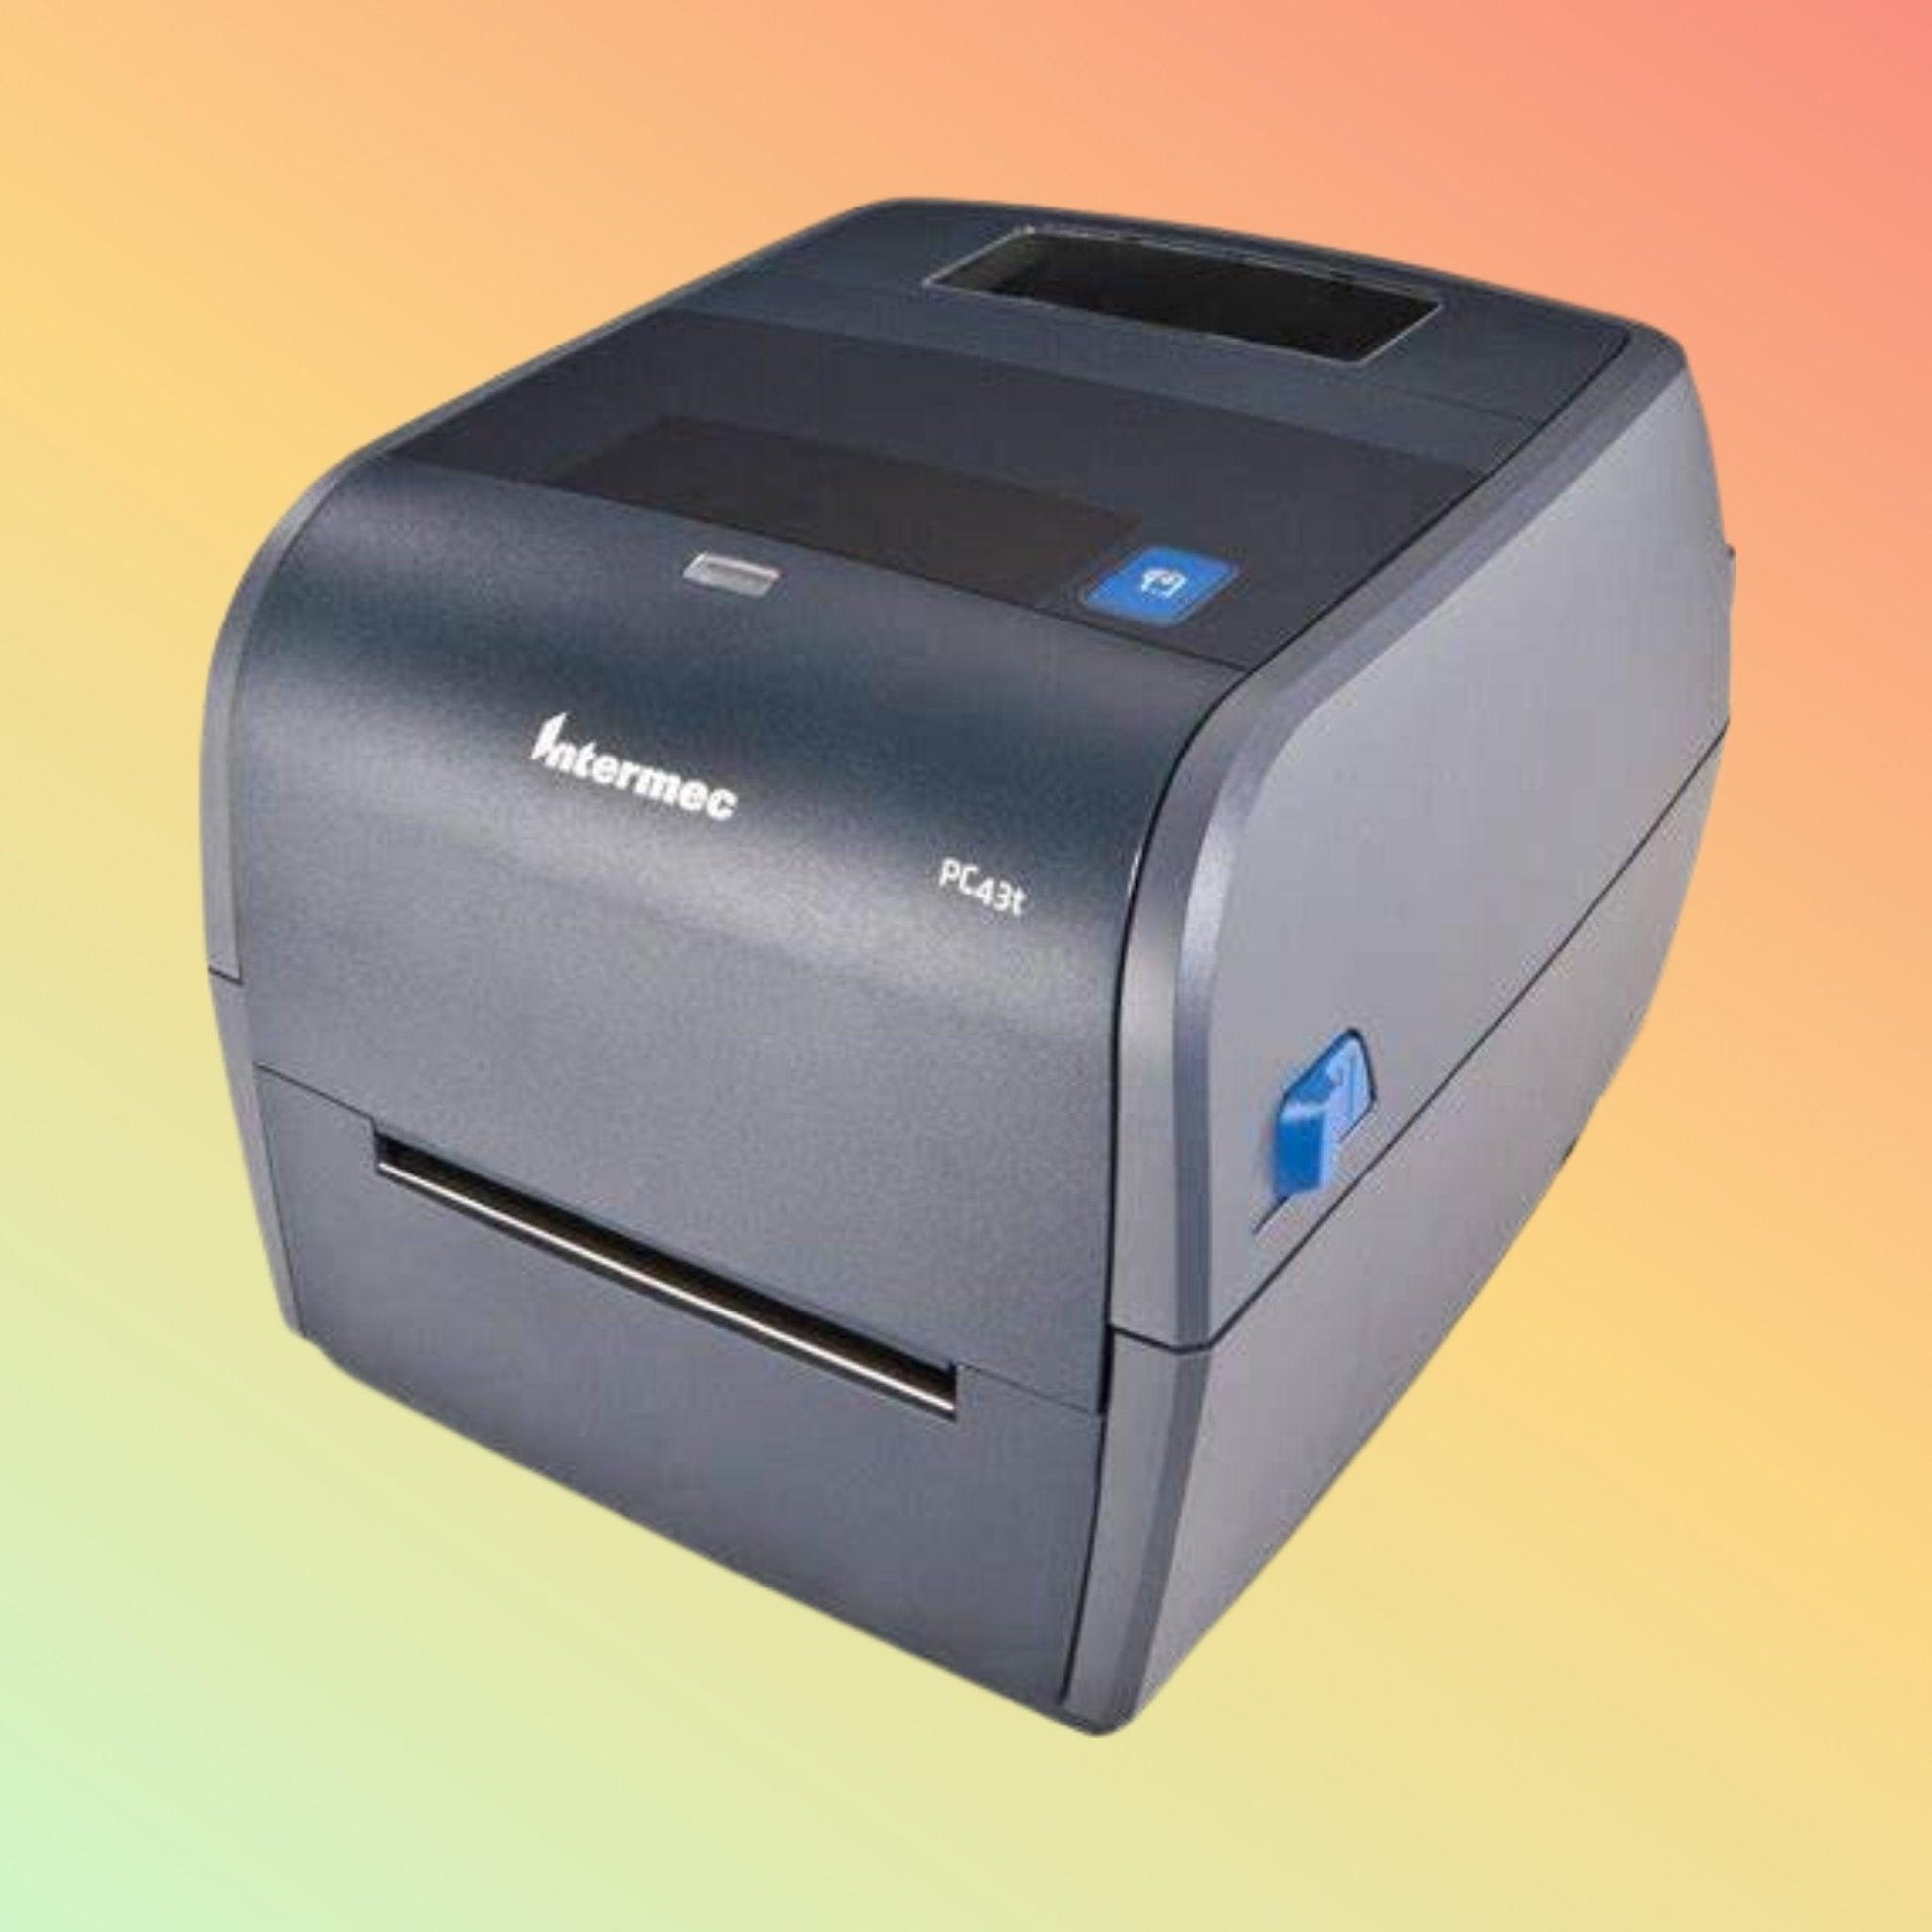 Barcode Printer - Intermac PC43 - Neotech